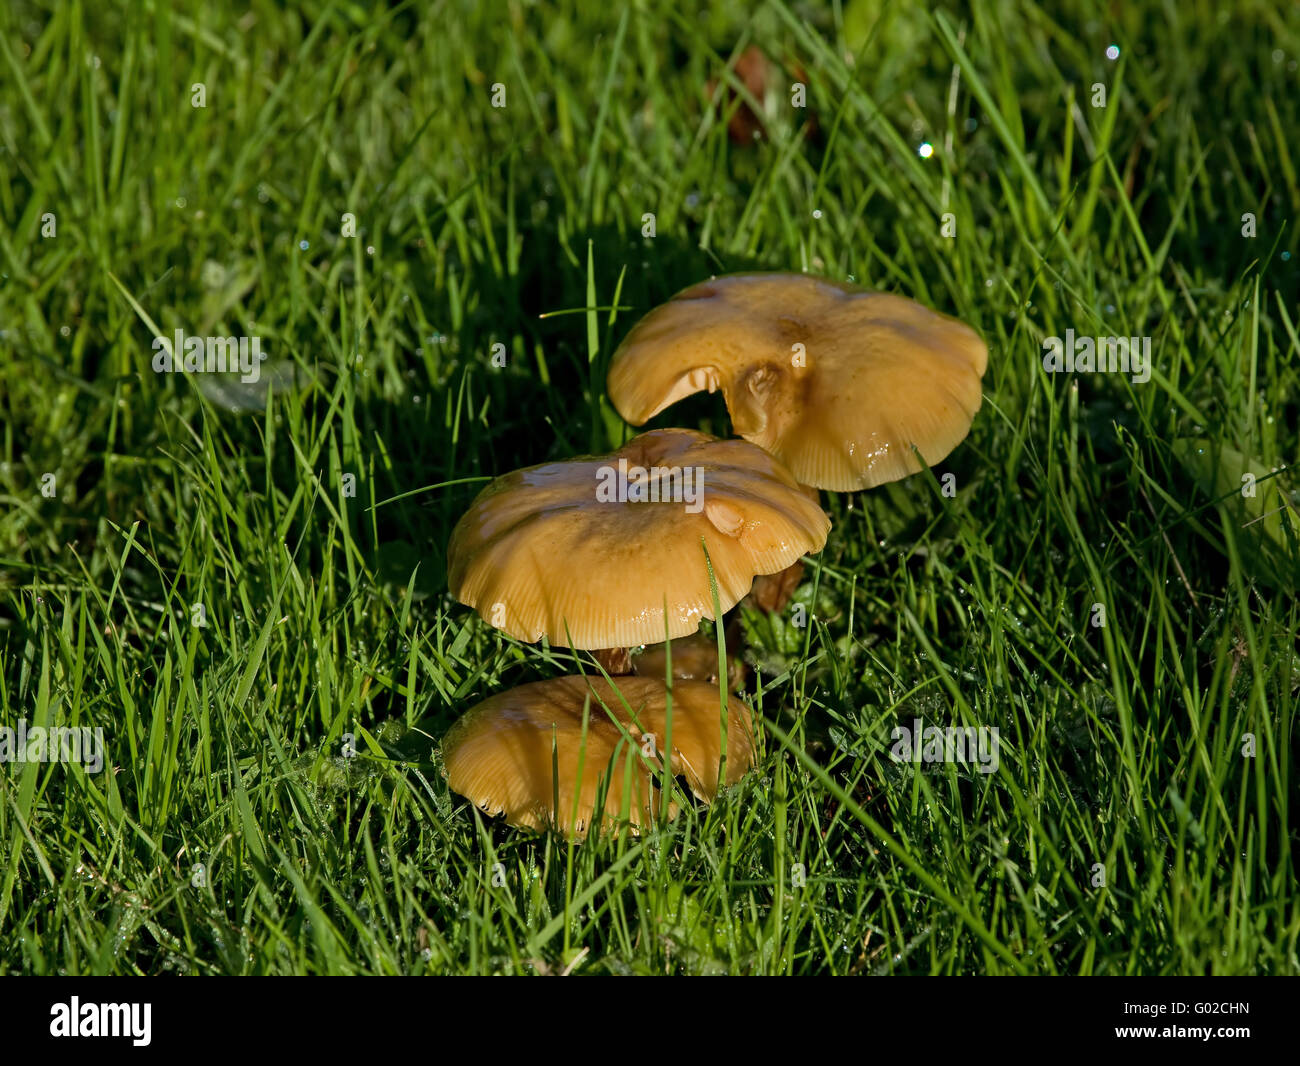 Orange Fungus in early sun and dew Stock Photo